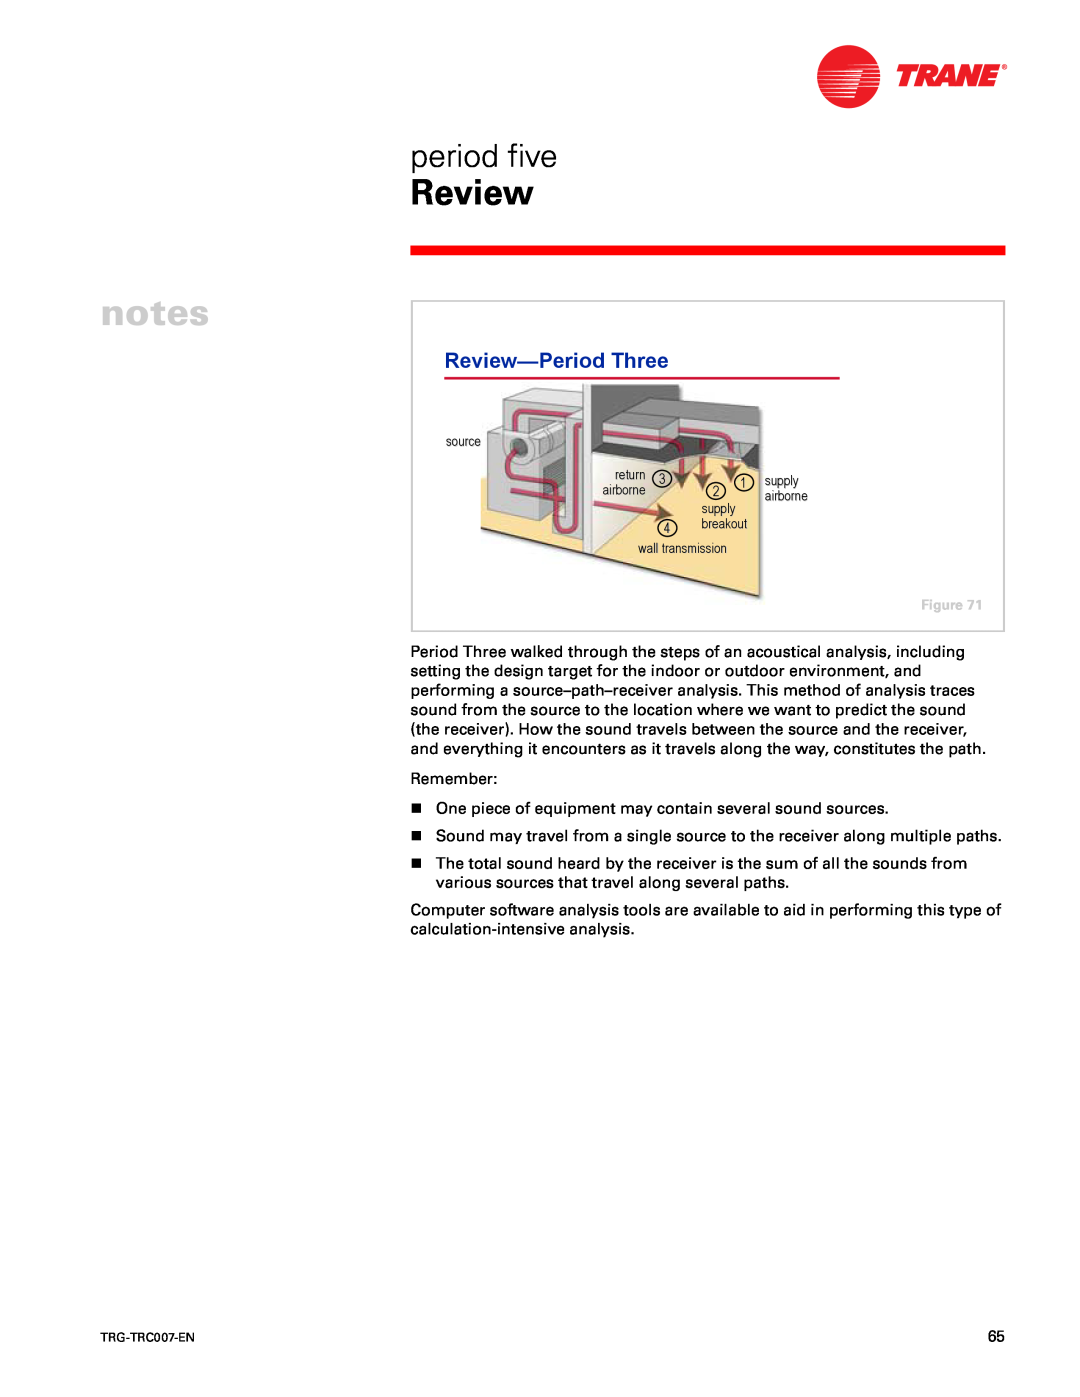 Trane TRG-TRC007-EN manual Review-PeriodThree, period five 